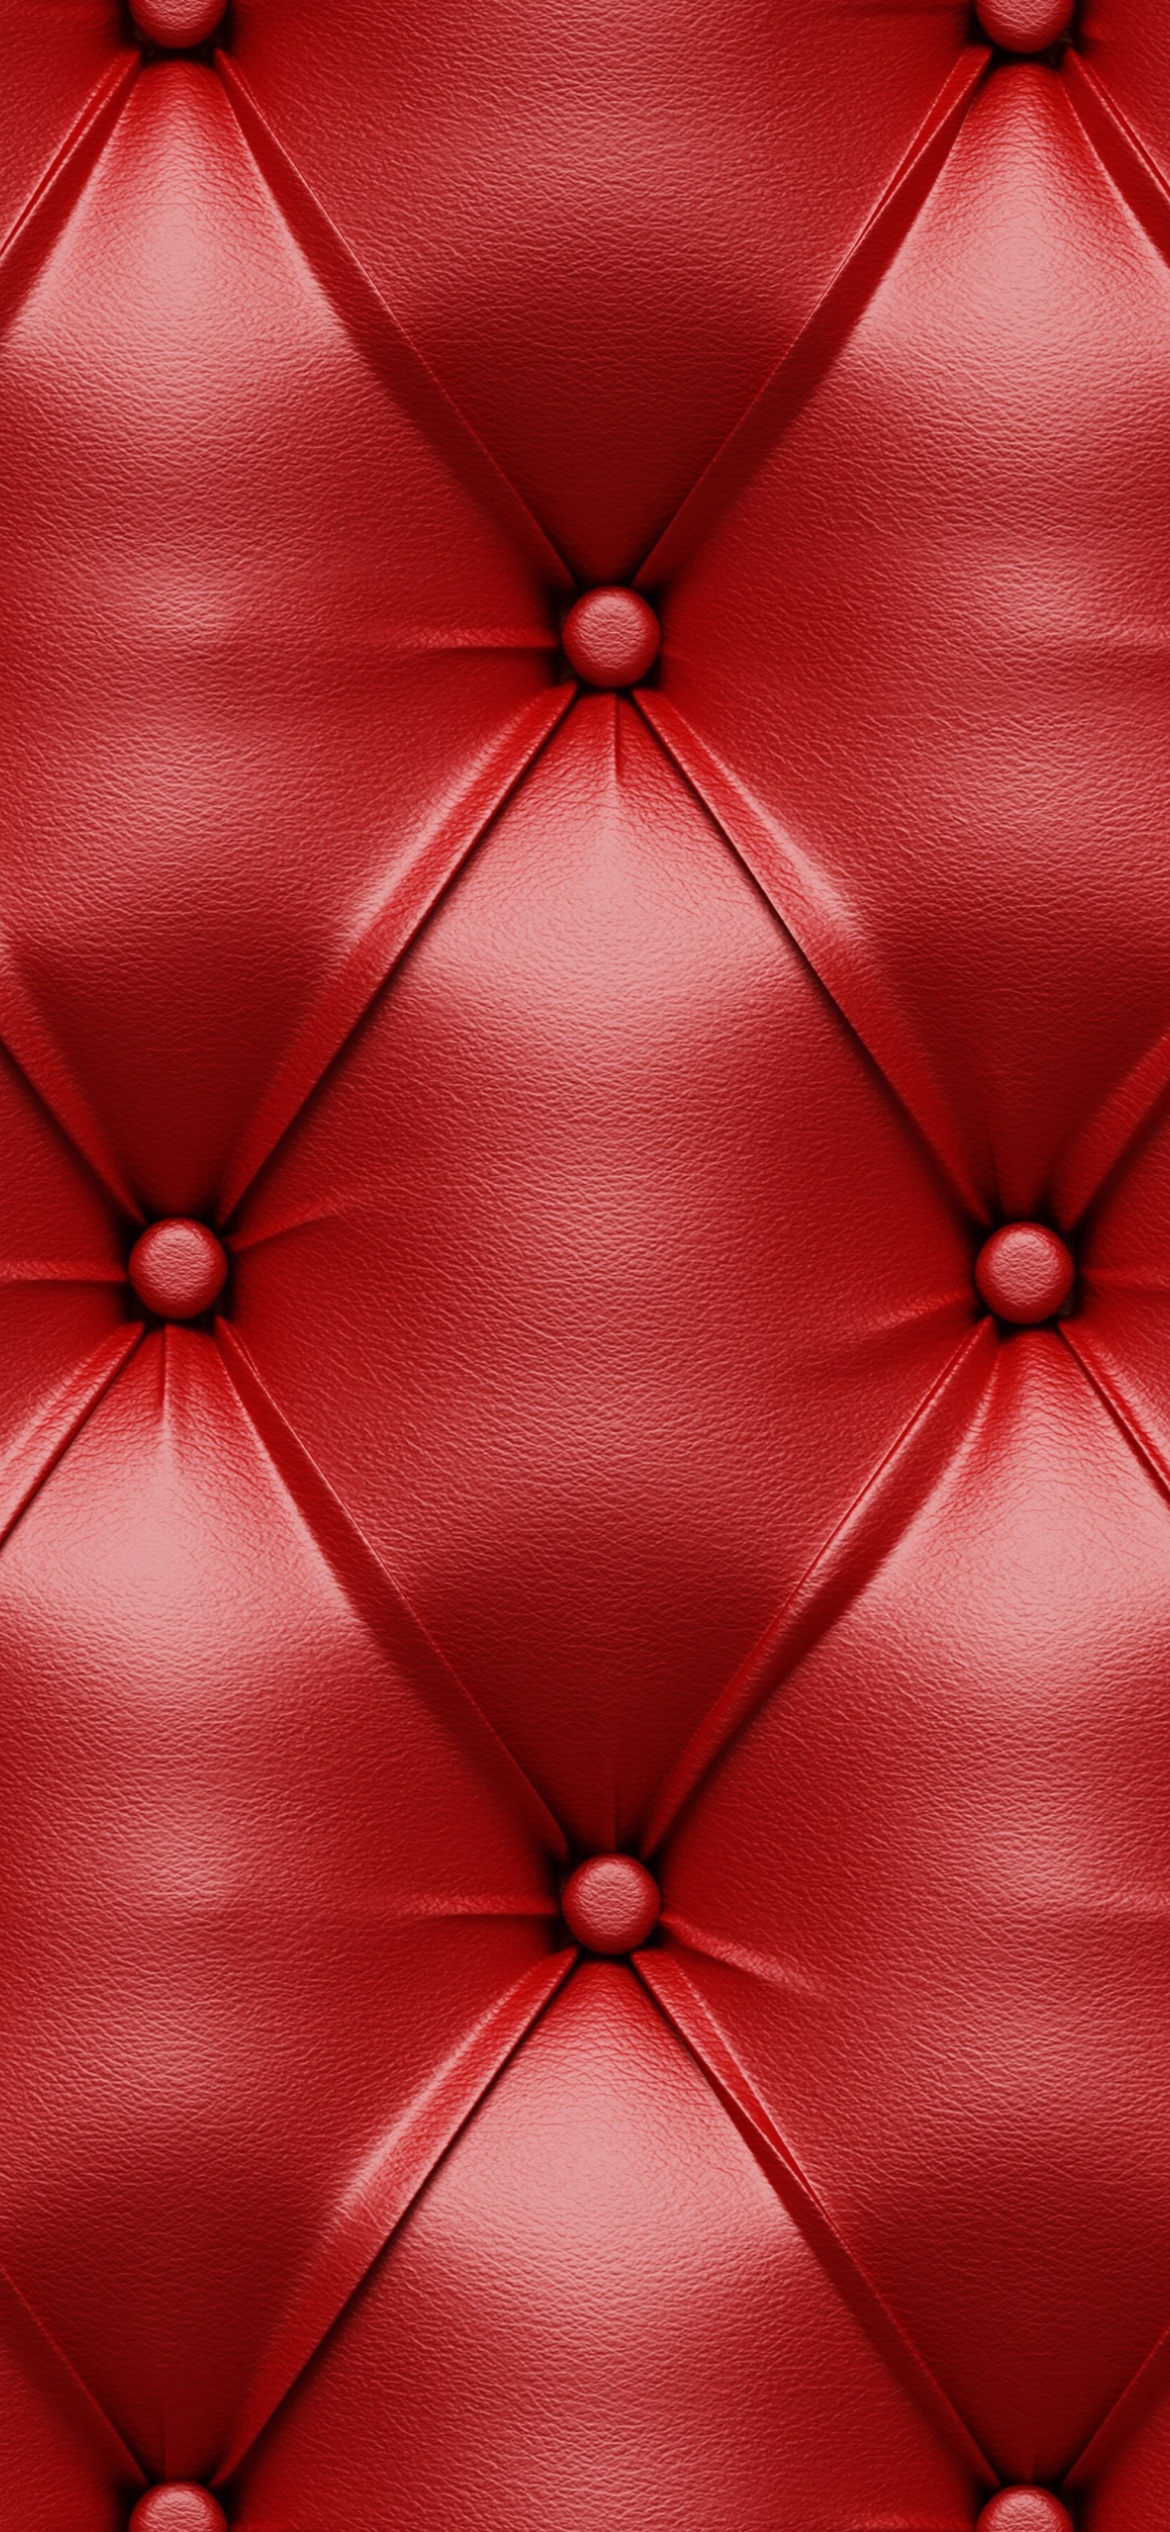 Luxury Leather wallpaper 1170x2532